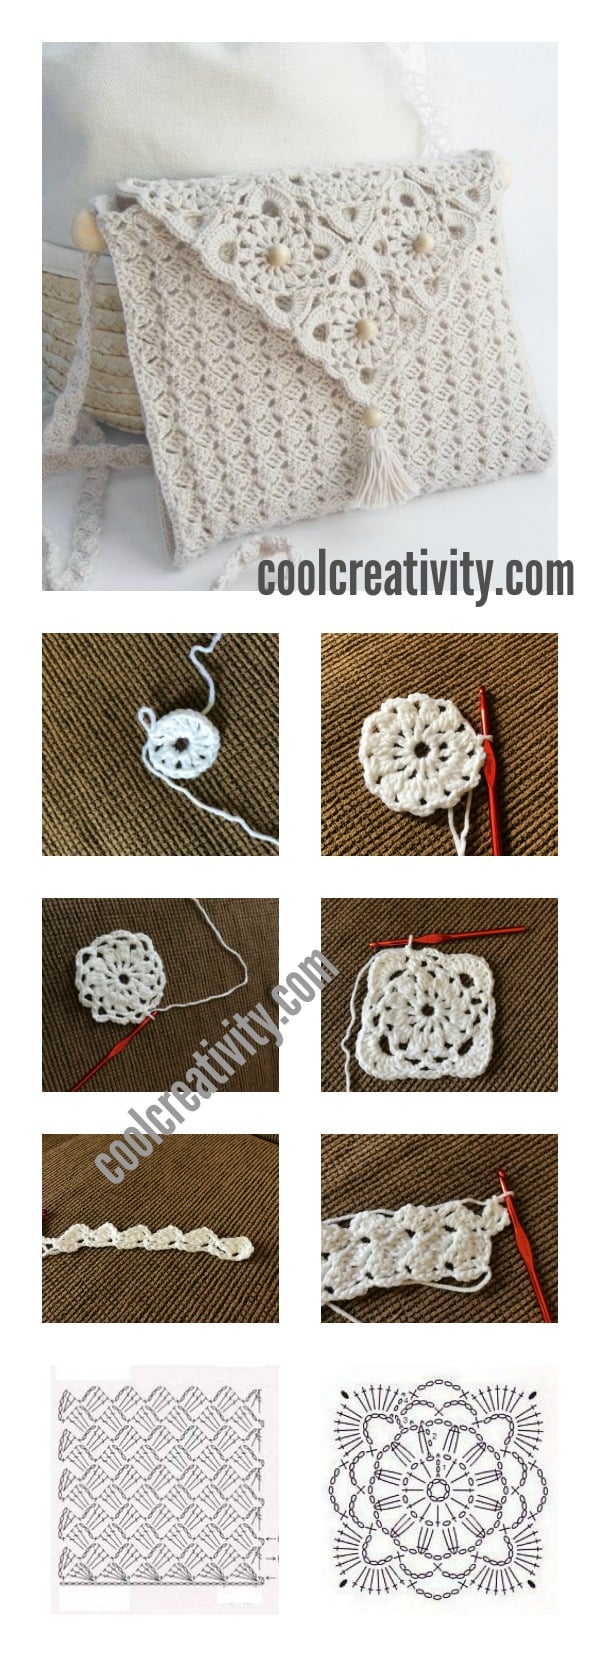 Crochet Pretty Handbag with Graphics and Free Pattern